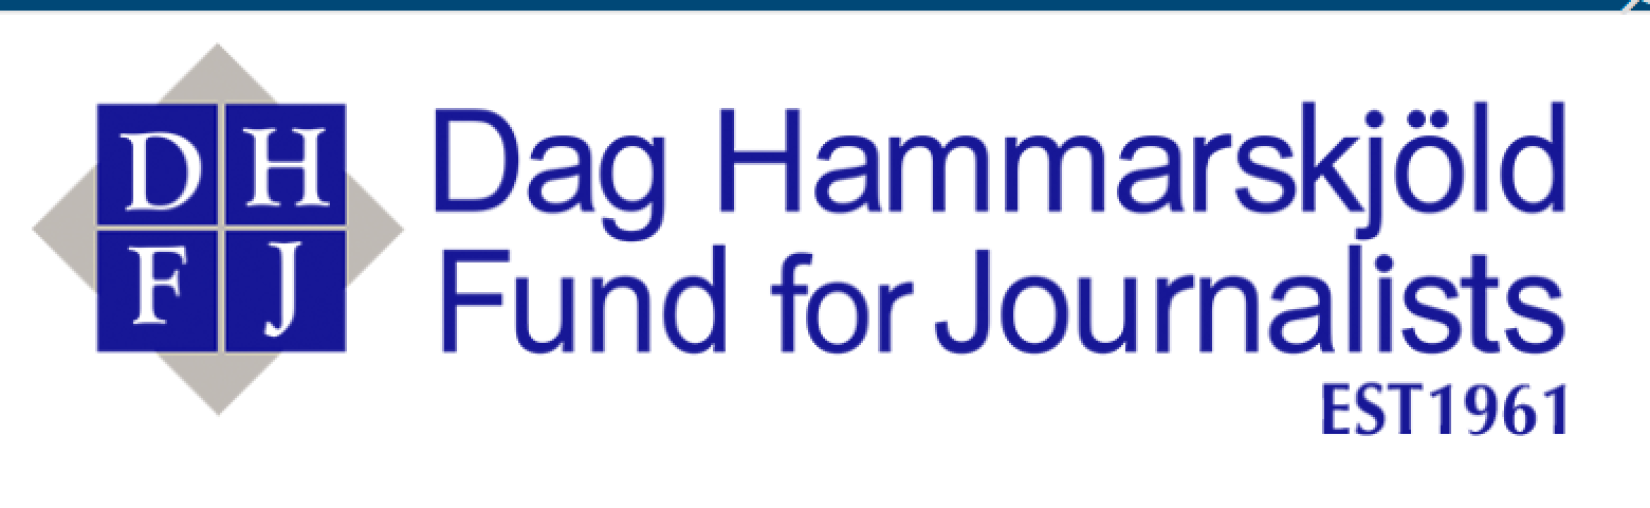 Logo of The Dag Hammarskjöld Fund for Journalists